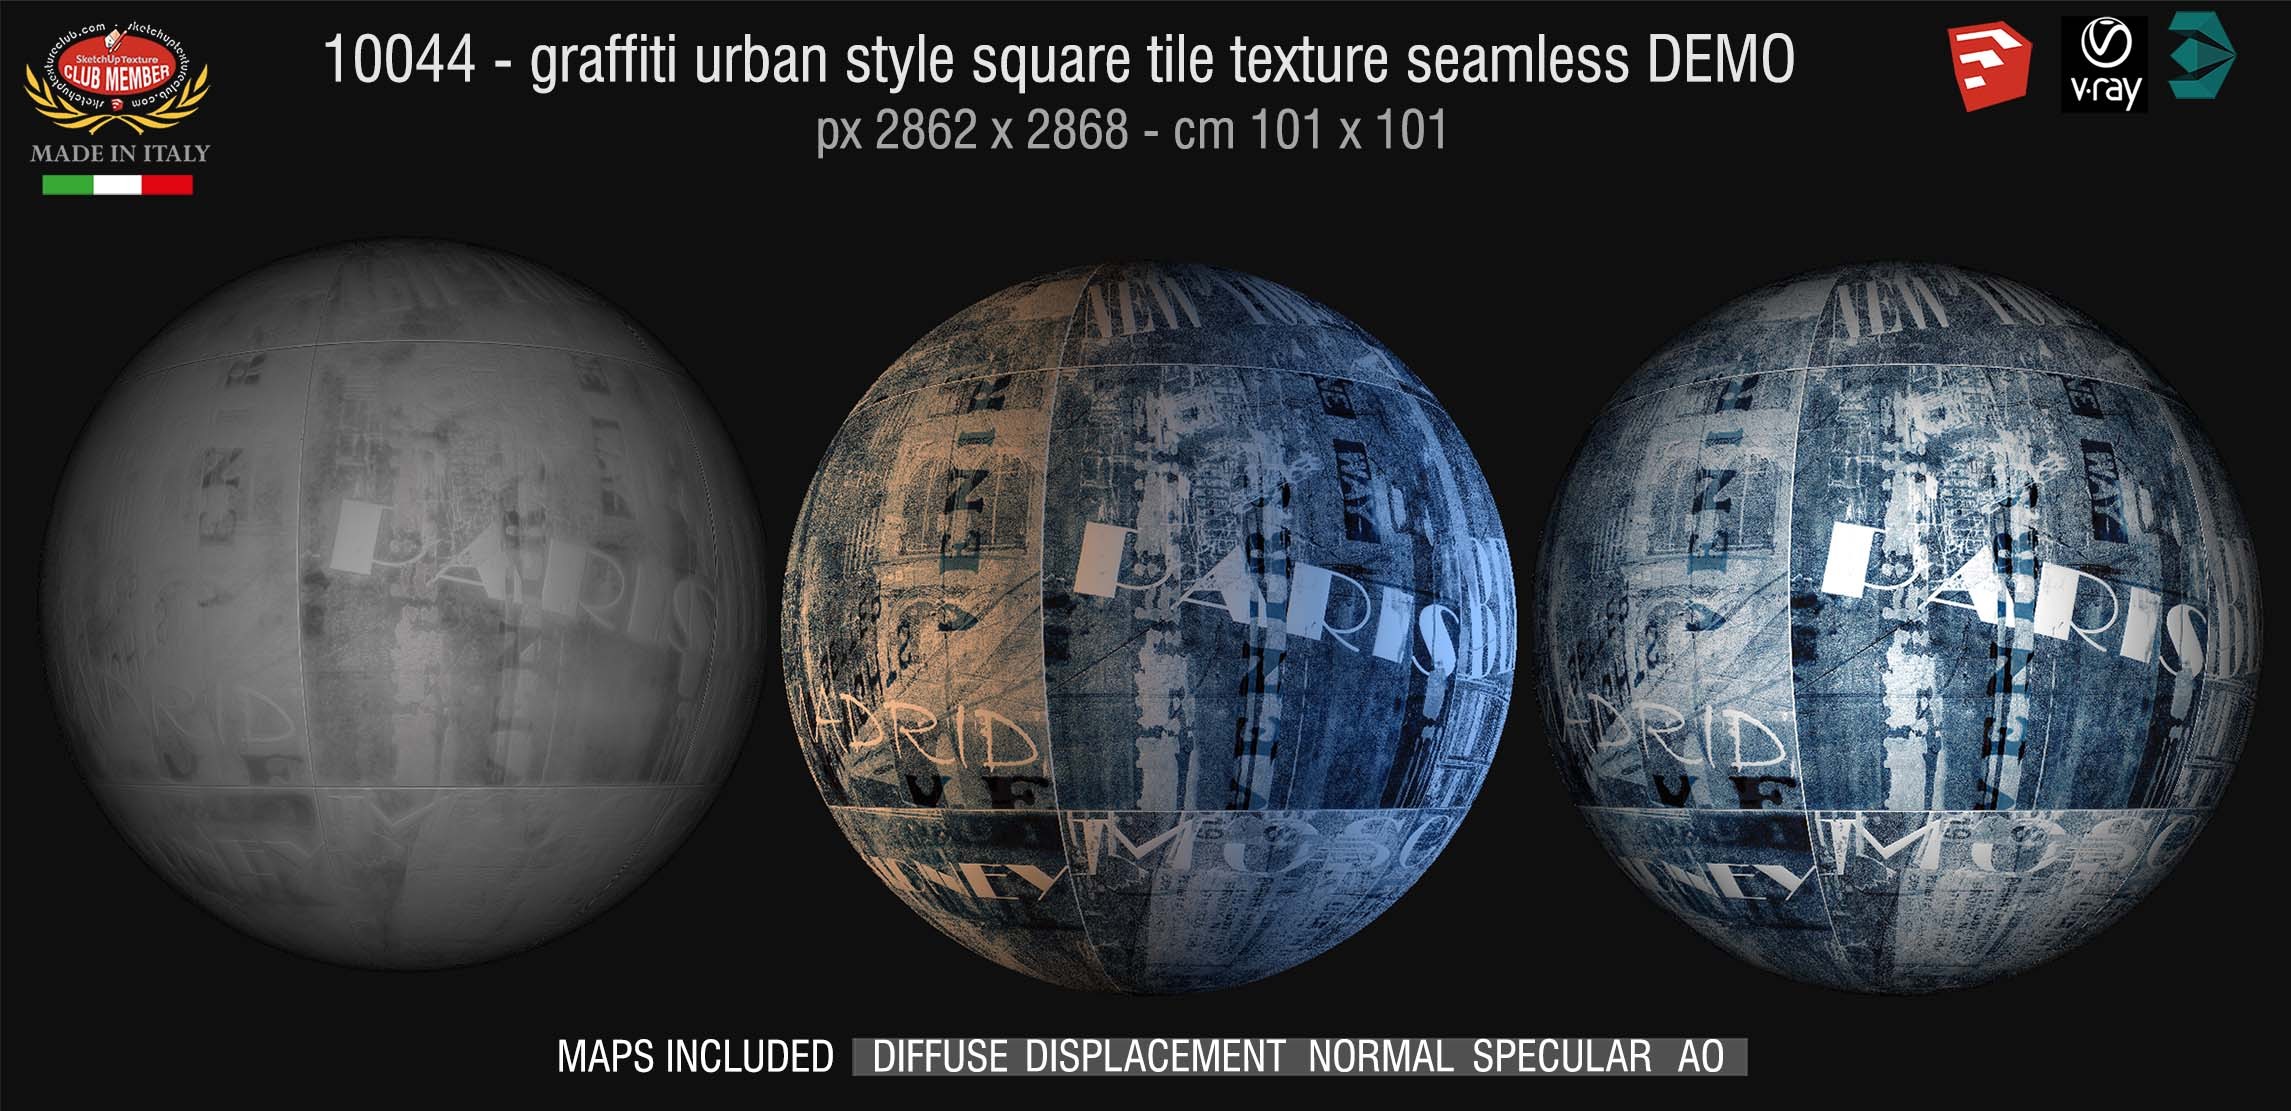 10044 HR Graffiti urban style square tile texture seamless + maps DEMO